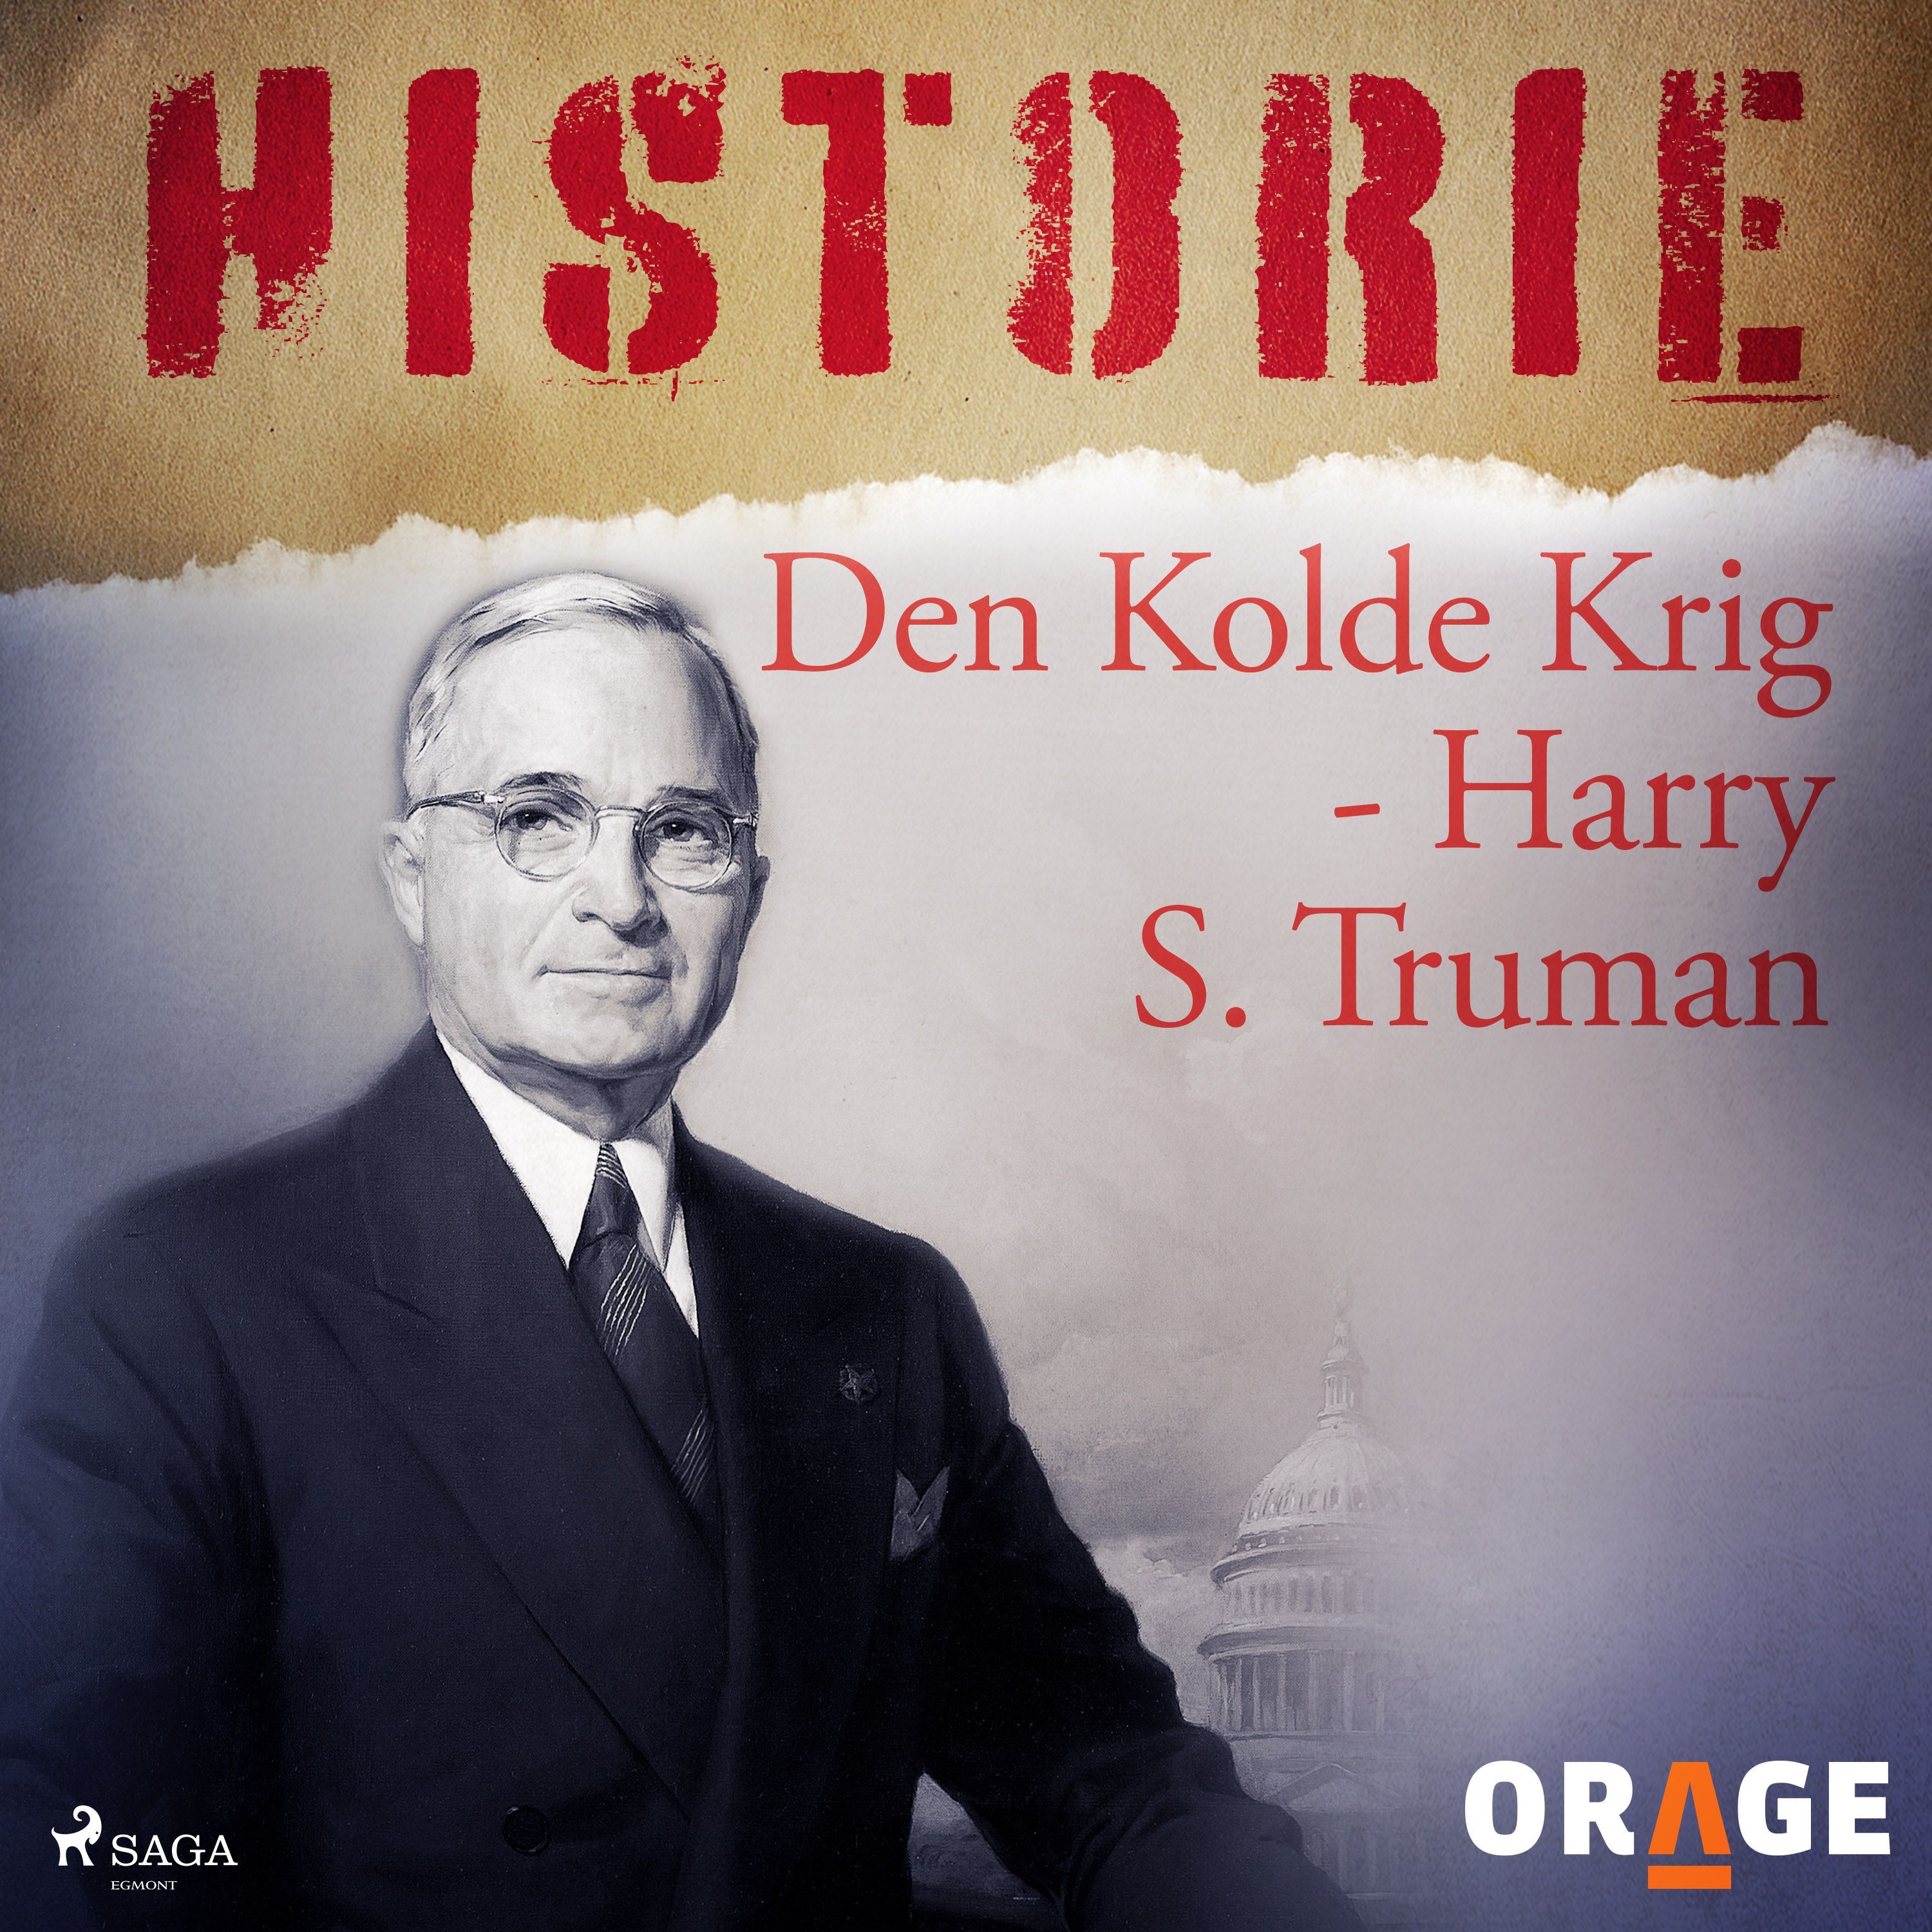 Den Kolde Krig - Harry S. Truman, audiobook by Orage